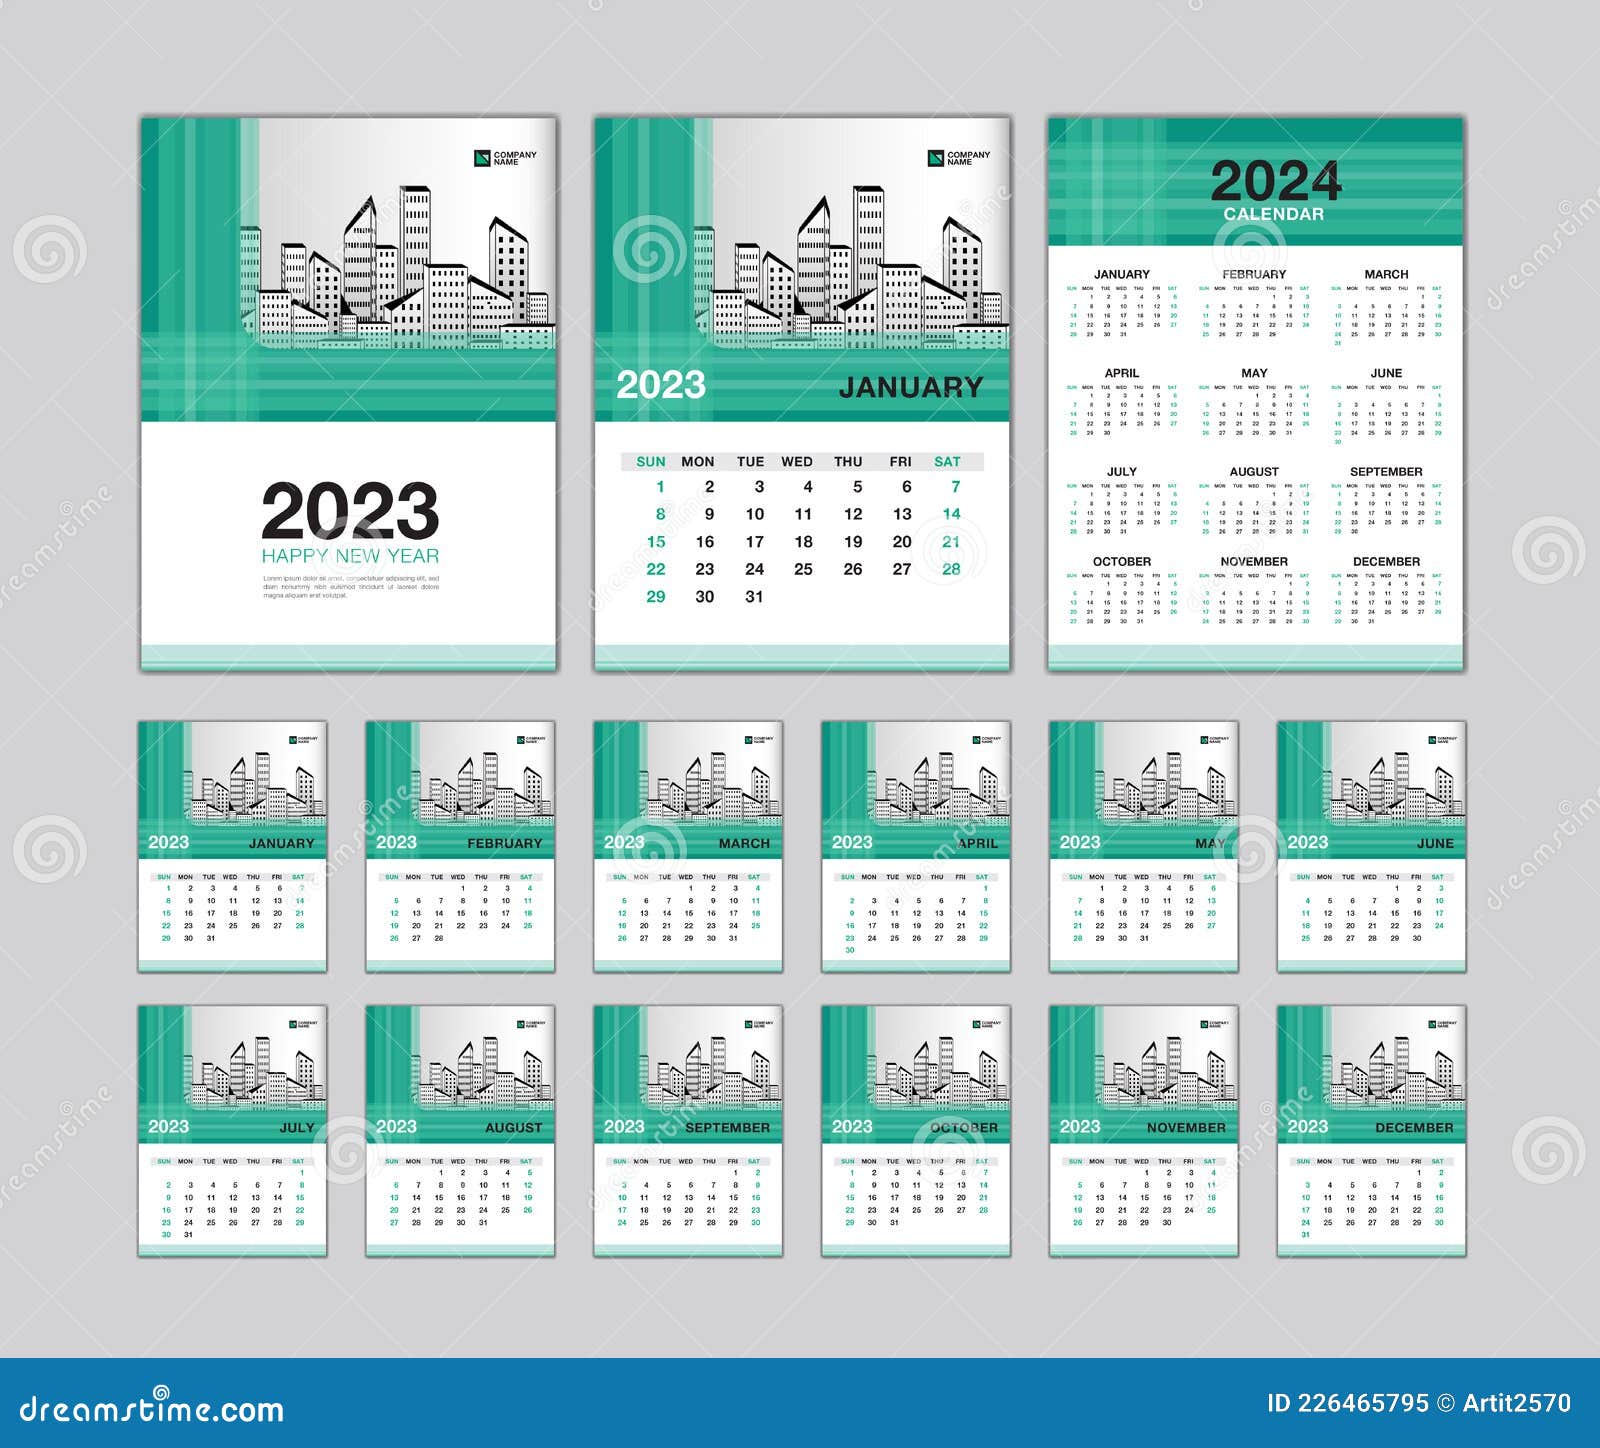 Calendrier mensuel 2023 - 2024 (affichage)